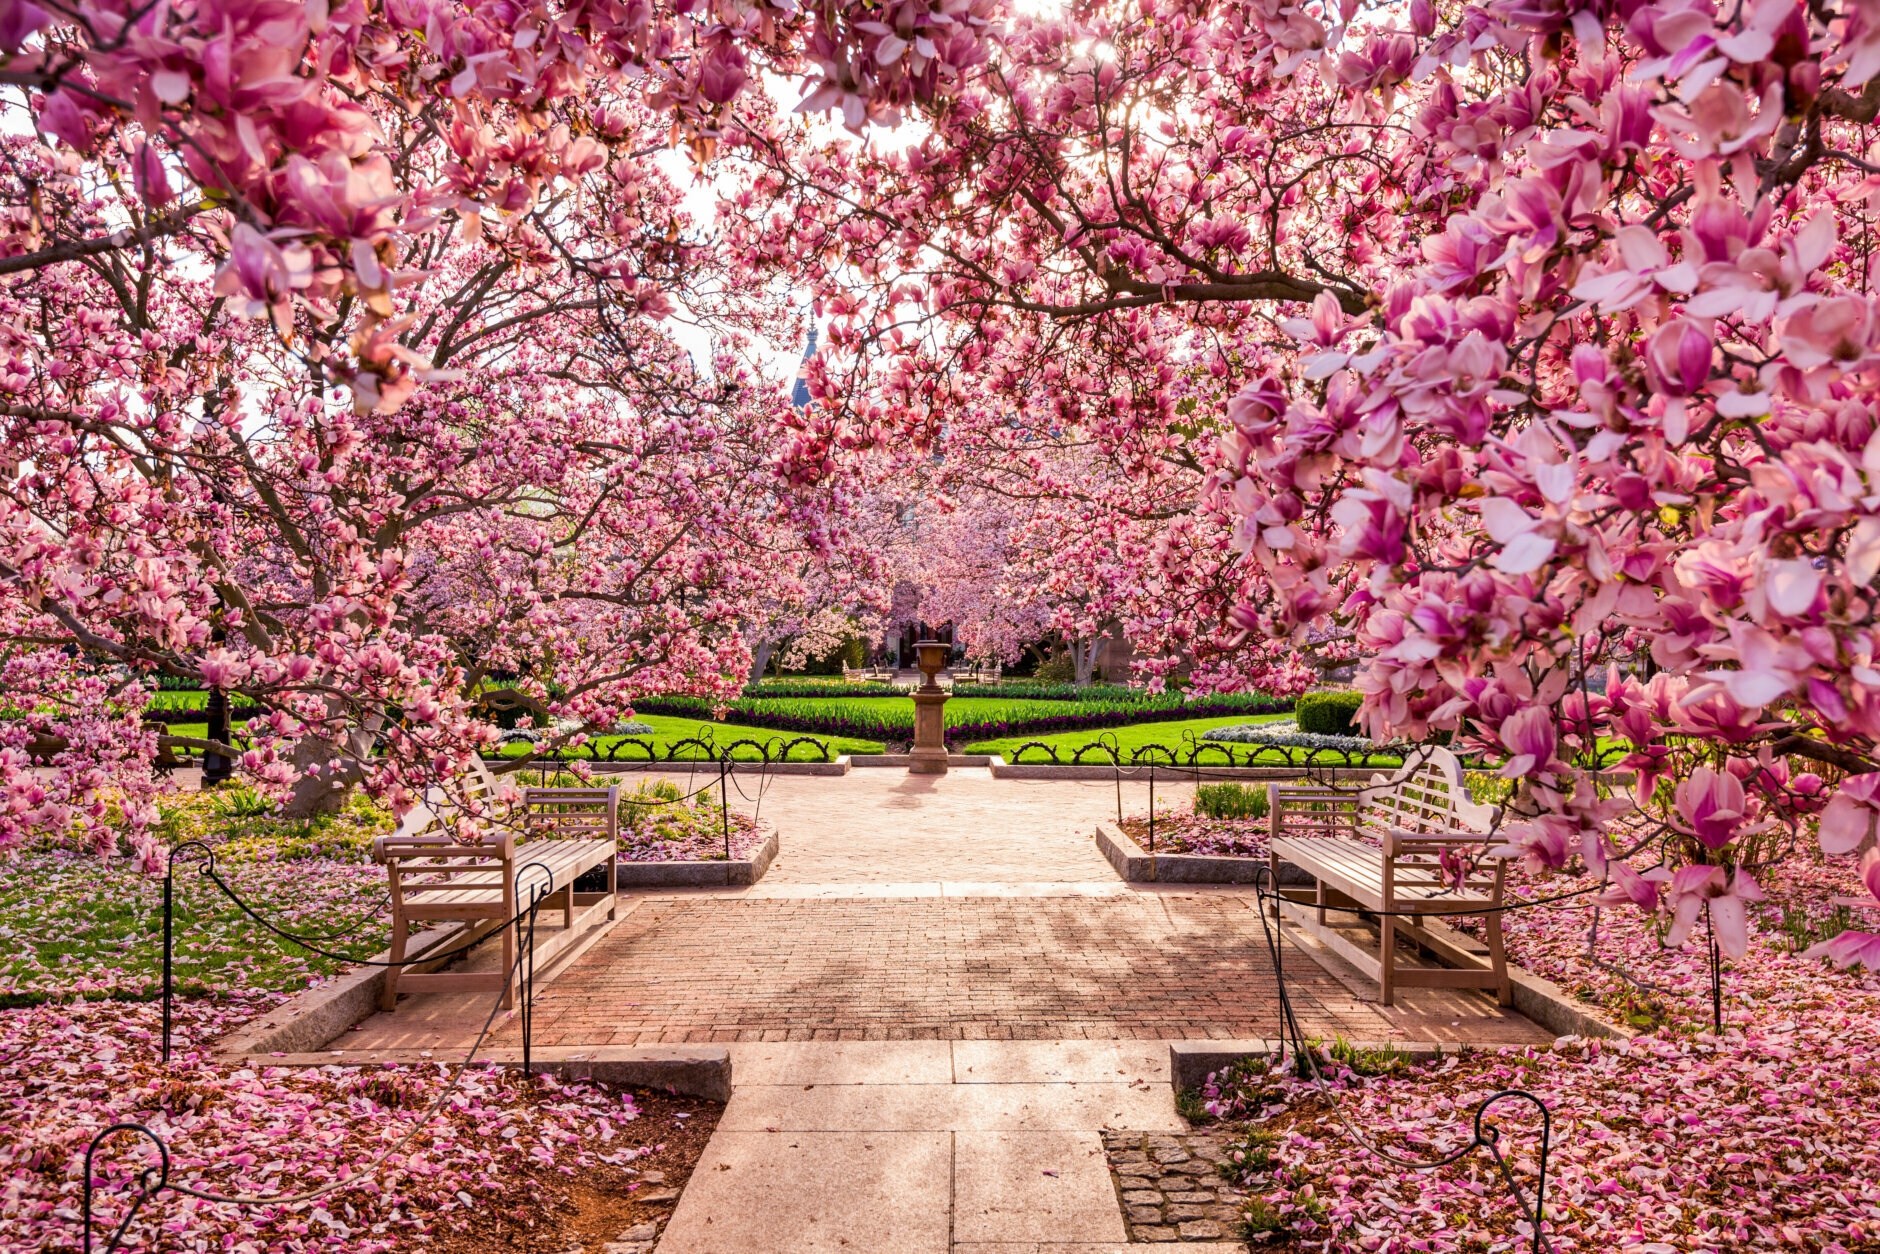 Washington DC spring foliage near the National Mall.